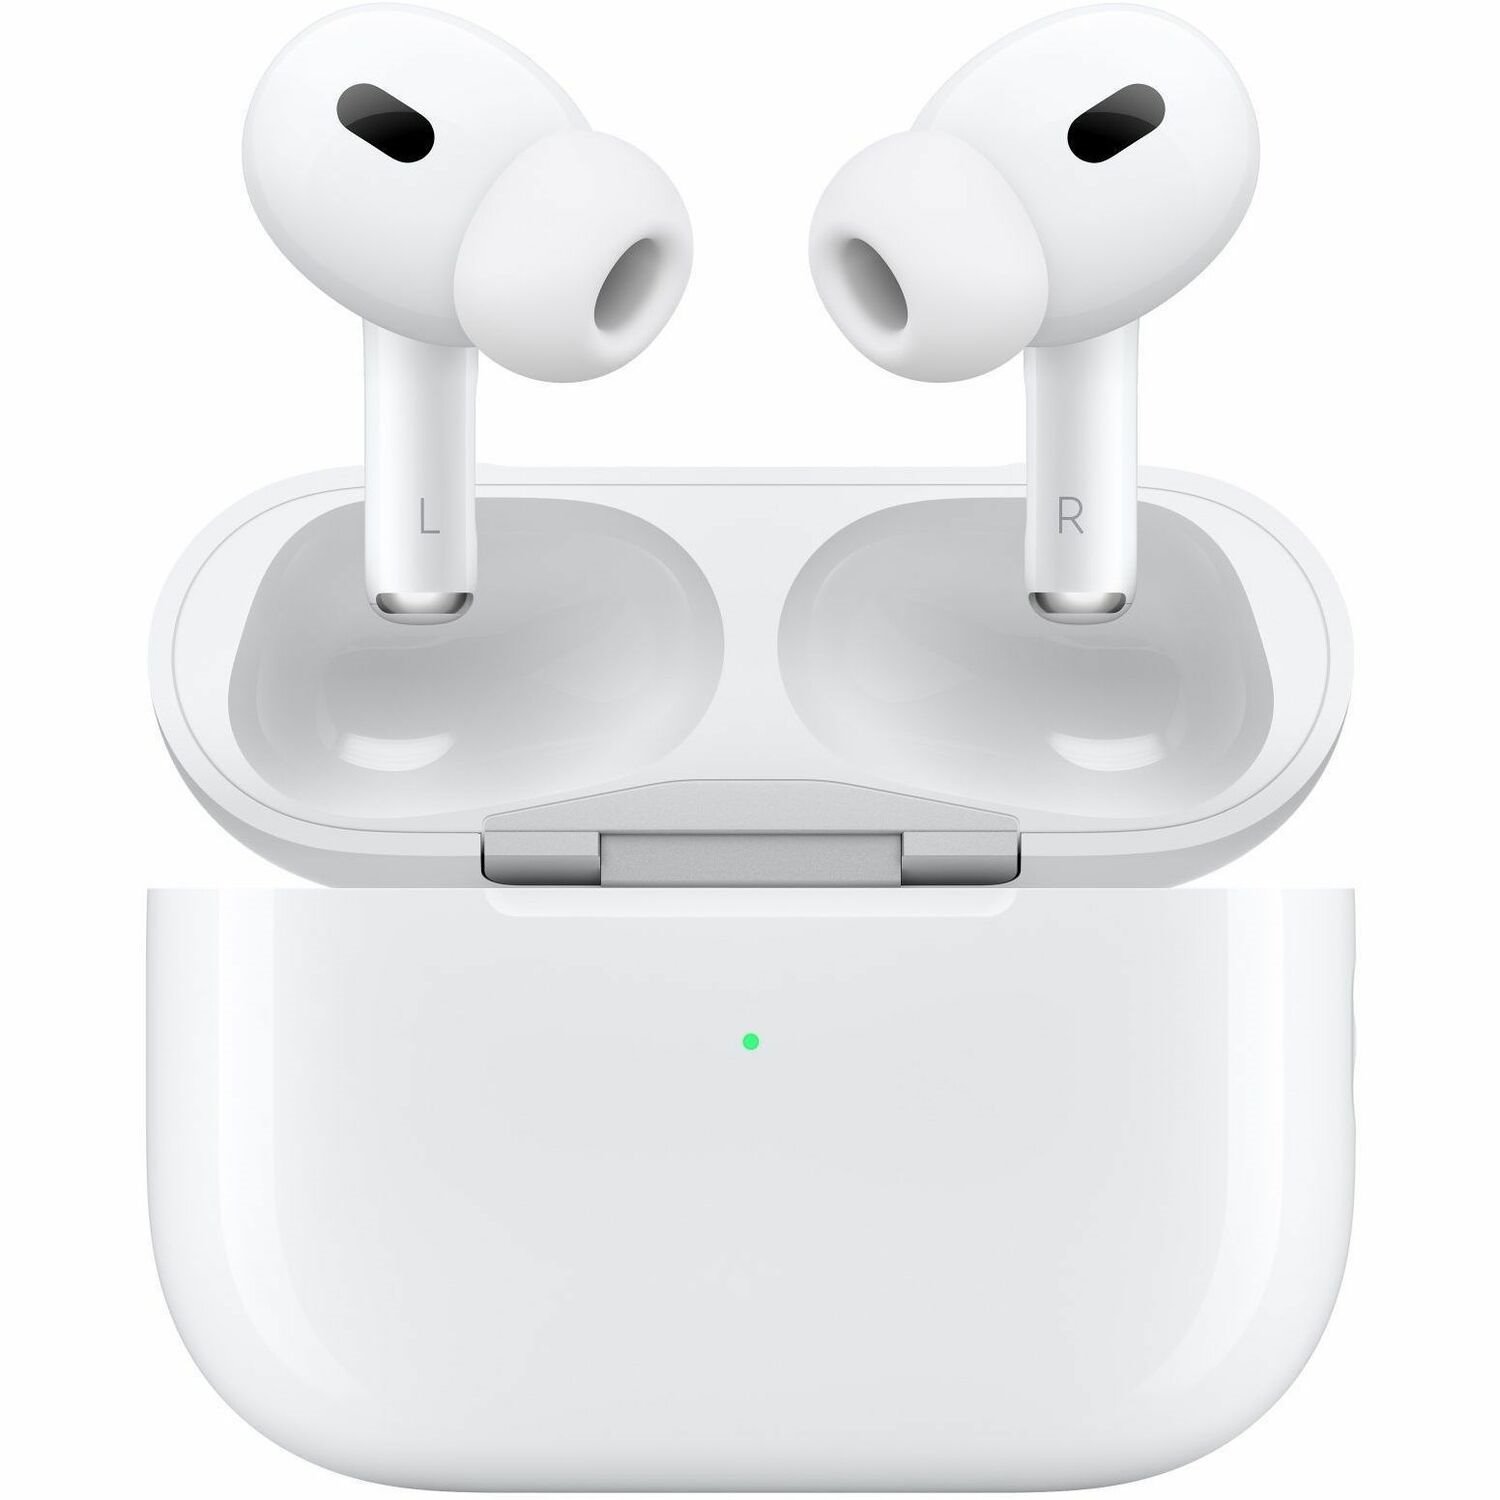 Apple AirPods Pro (2nd Generation) True Wireless Earbud Stereo Earset